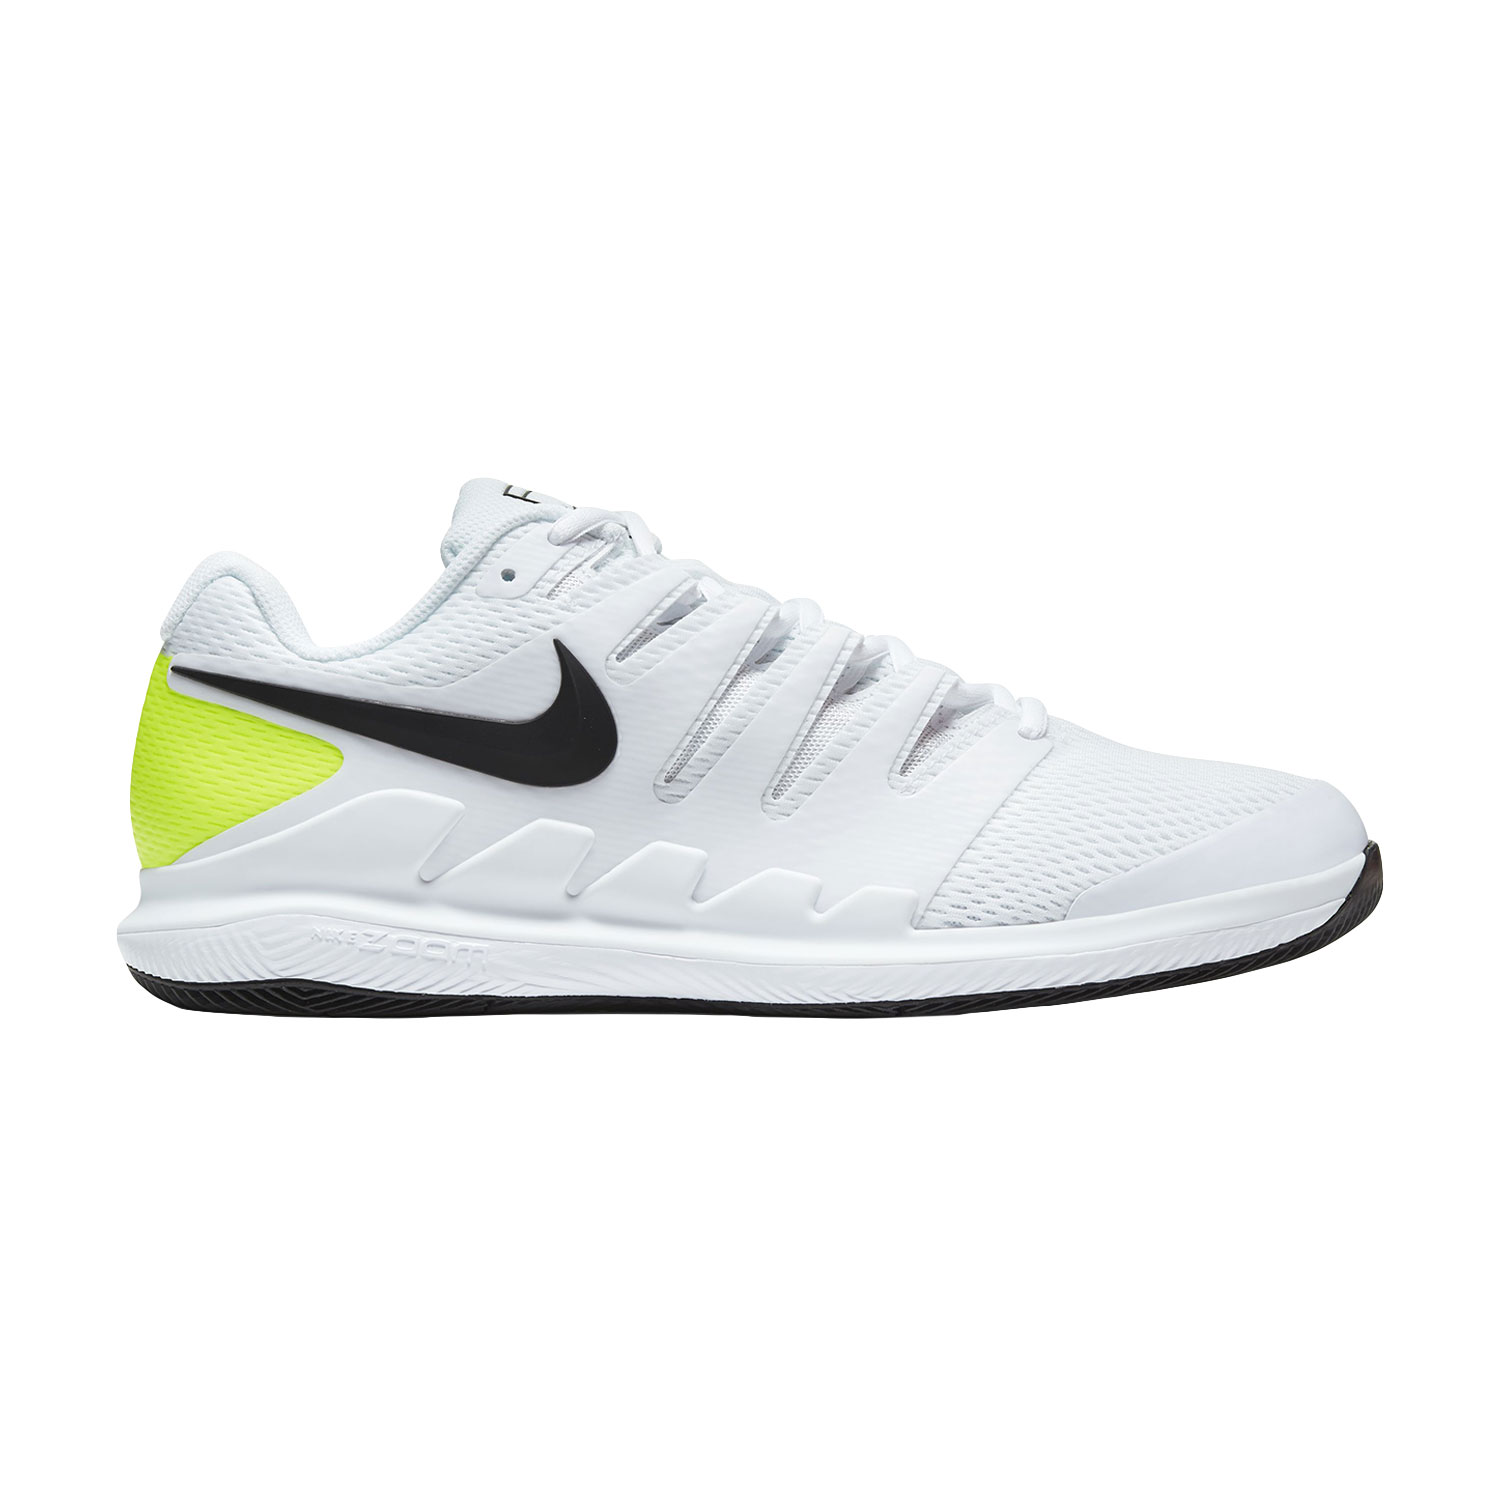 Nike Zoom Vapor X Scarpe da Tennis Uomo - White/Black/Volt